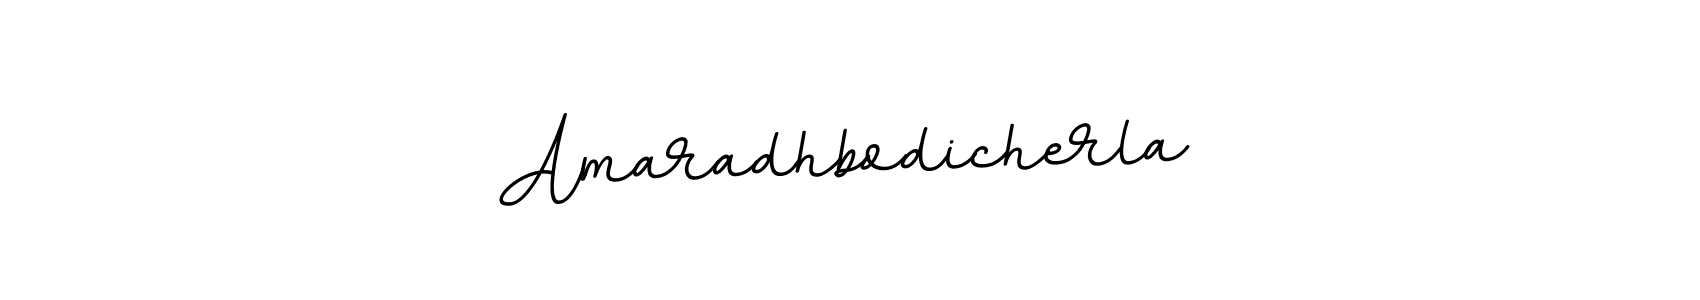 How to Draw Amaradhbodicherla signature style? BallpointsItalic-DORy9 is a latest design signature styles for name Amaradhbodicherla. Amaradhbodicherla signature style 11 images and pictures png